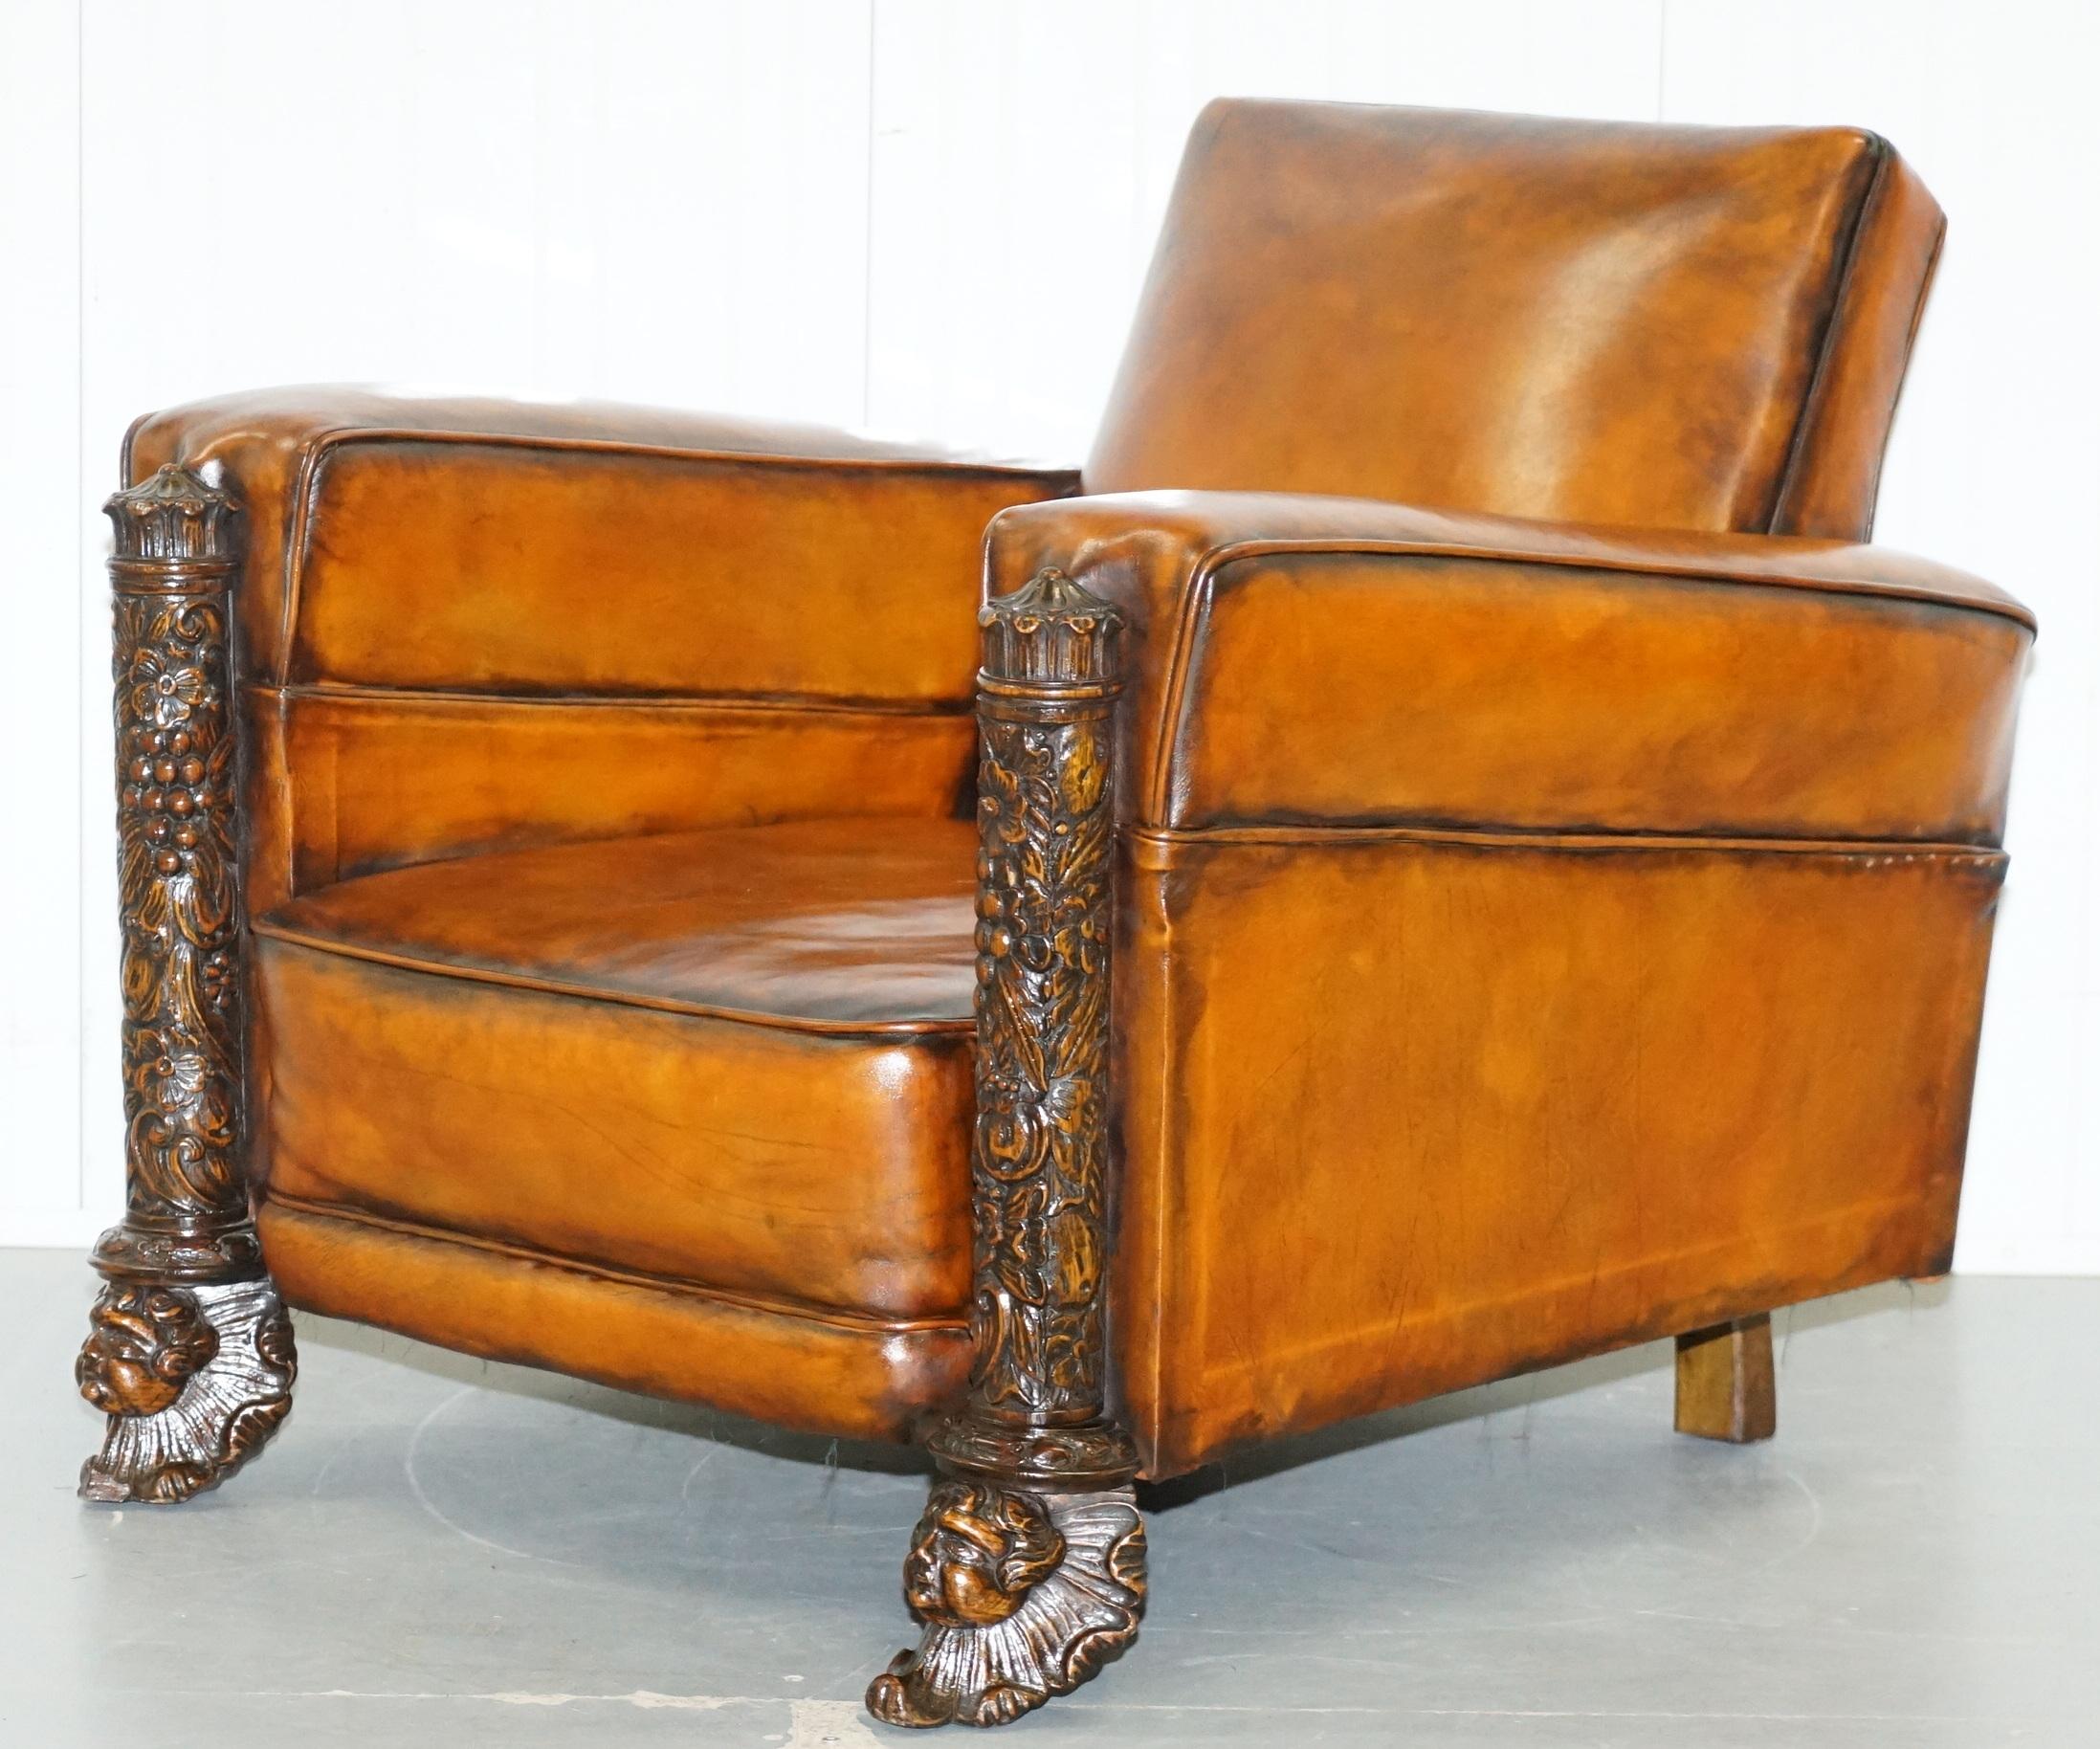 Pair of Victorian Brown Leather Club Armchairs 17th Century Cherub Putti Angels (Englisch)